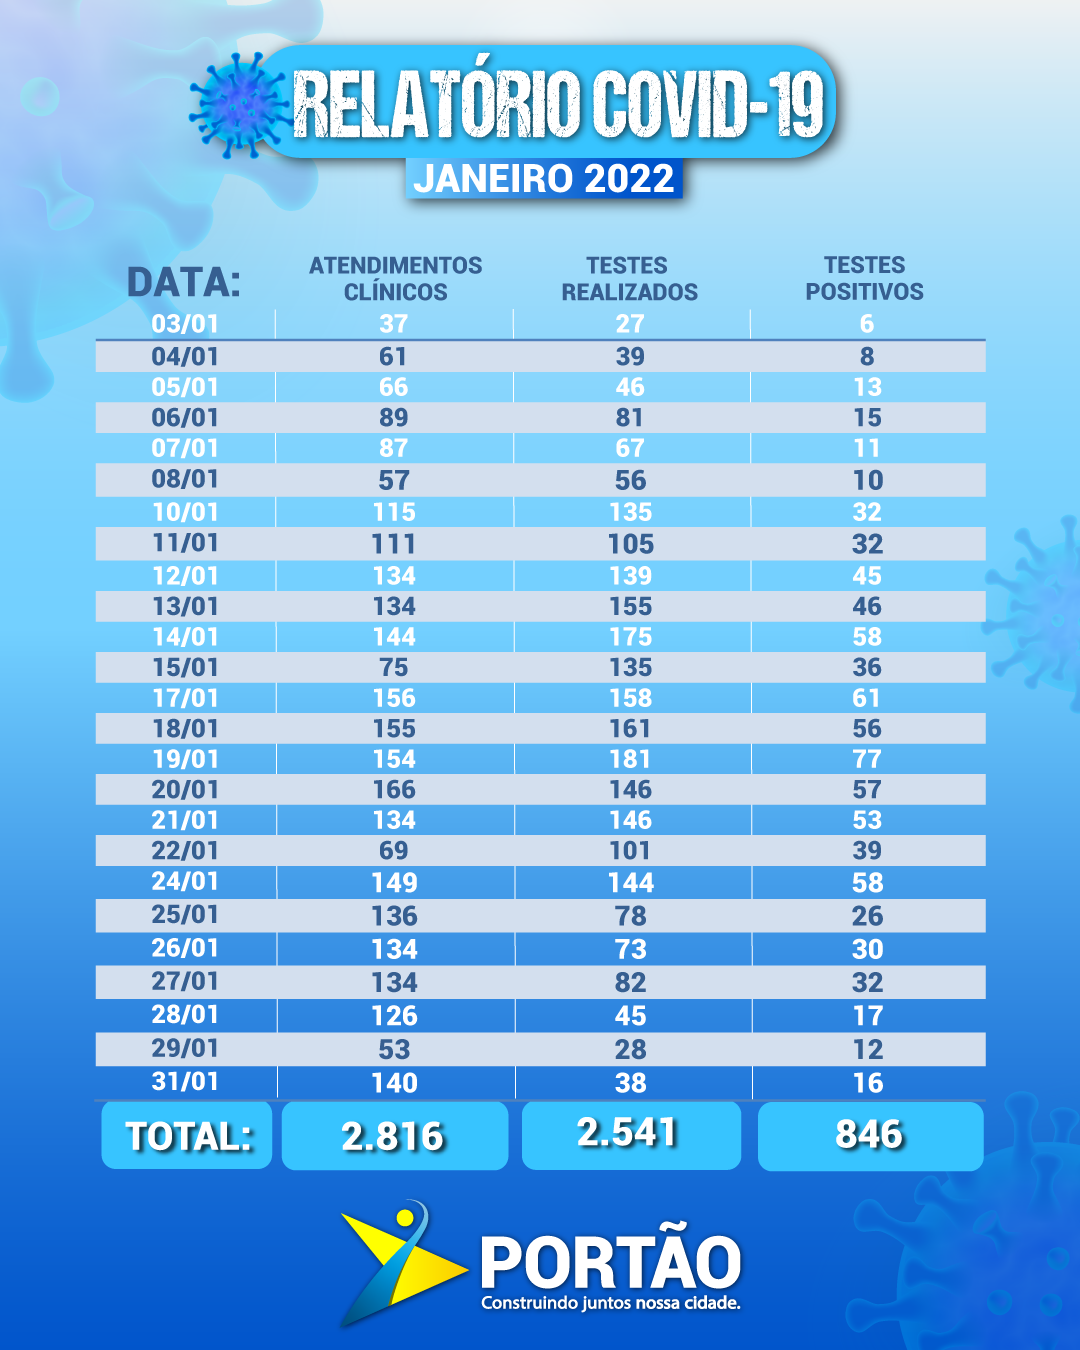 RELAT?RIO COVID-19 JANEIRO 2022: